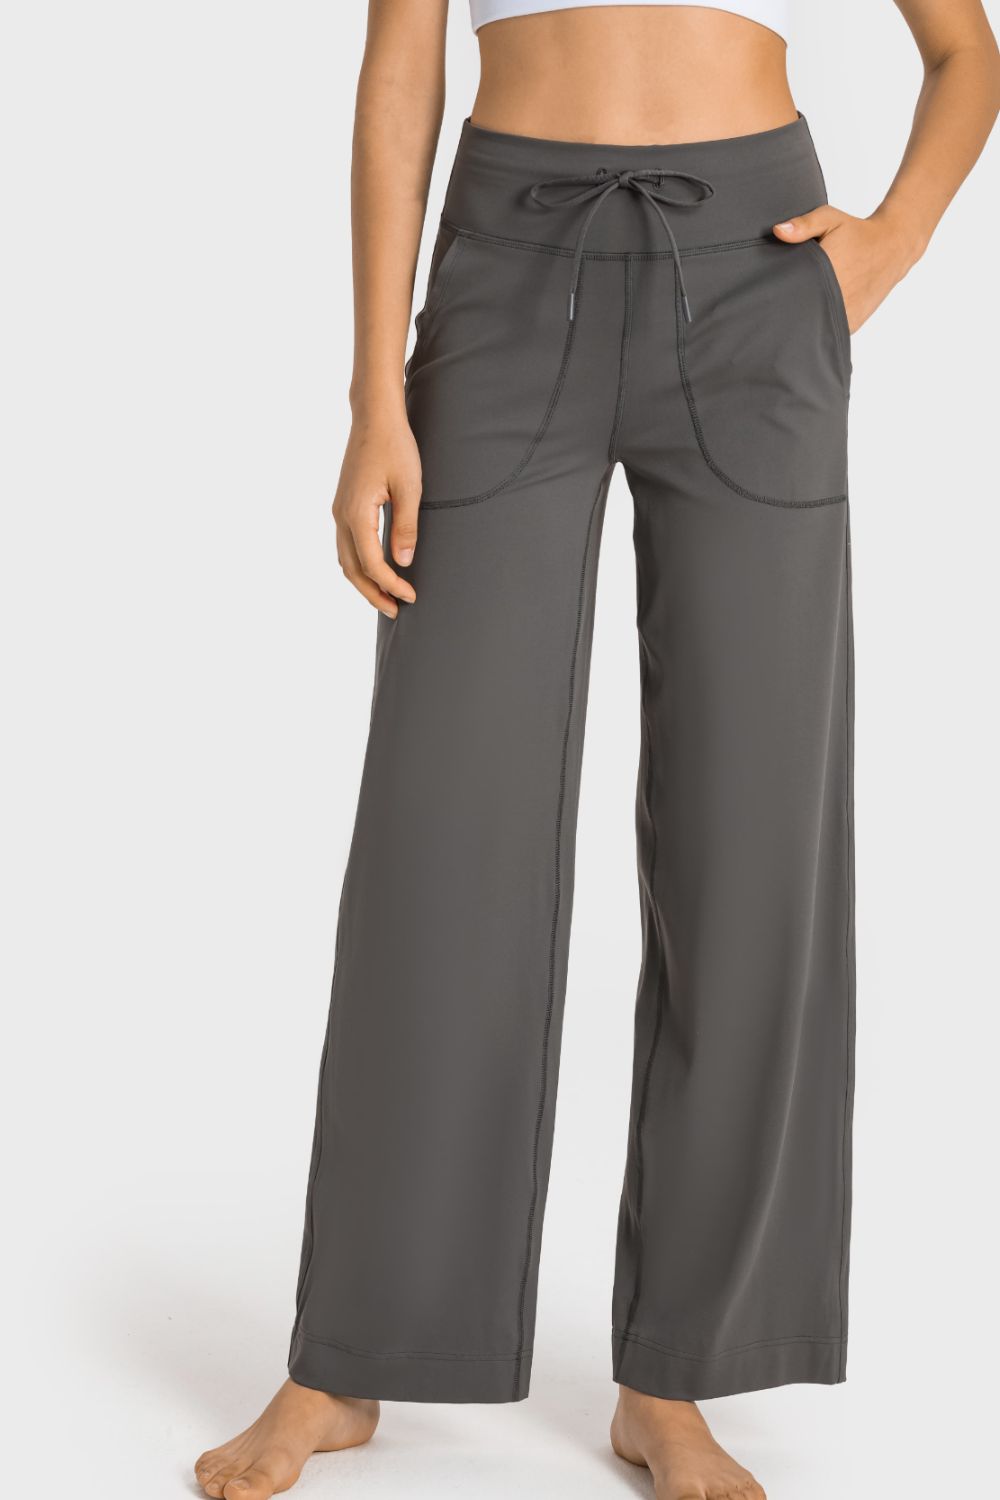 Drawstring Waist Wide Leg Sports Pants with Pockets - DromedarShop.com Online Boutique